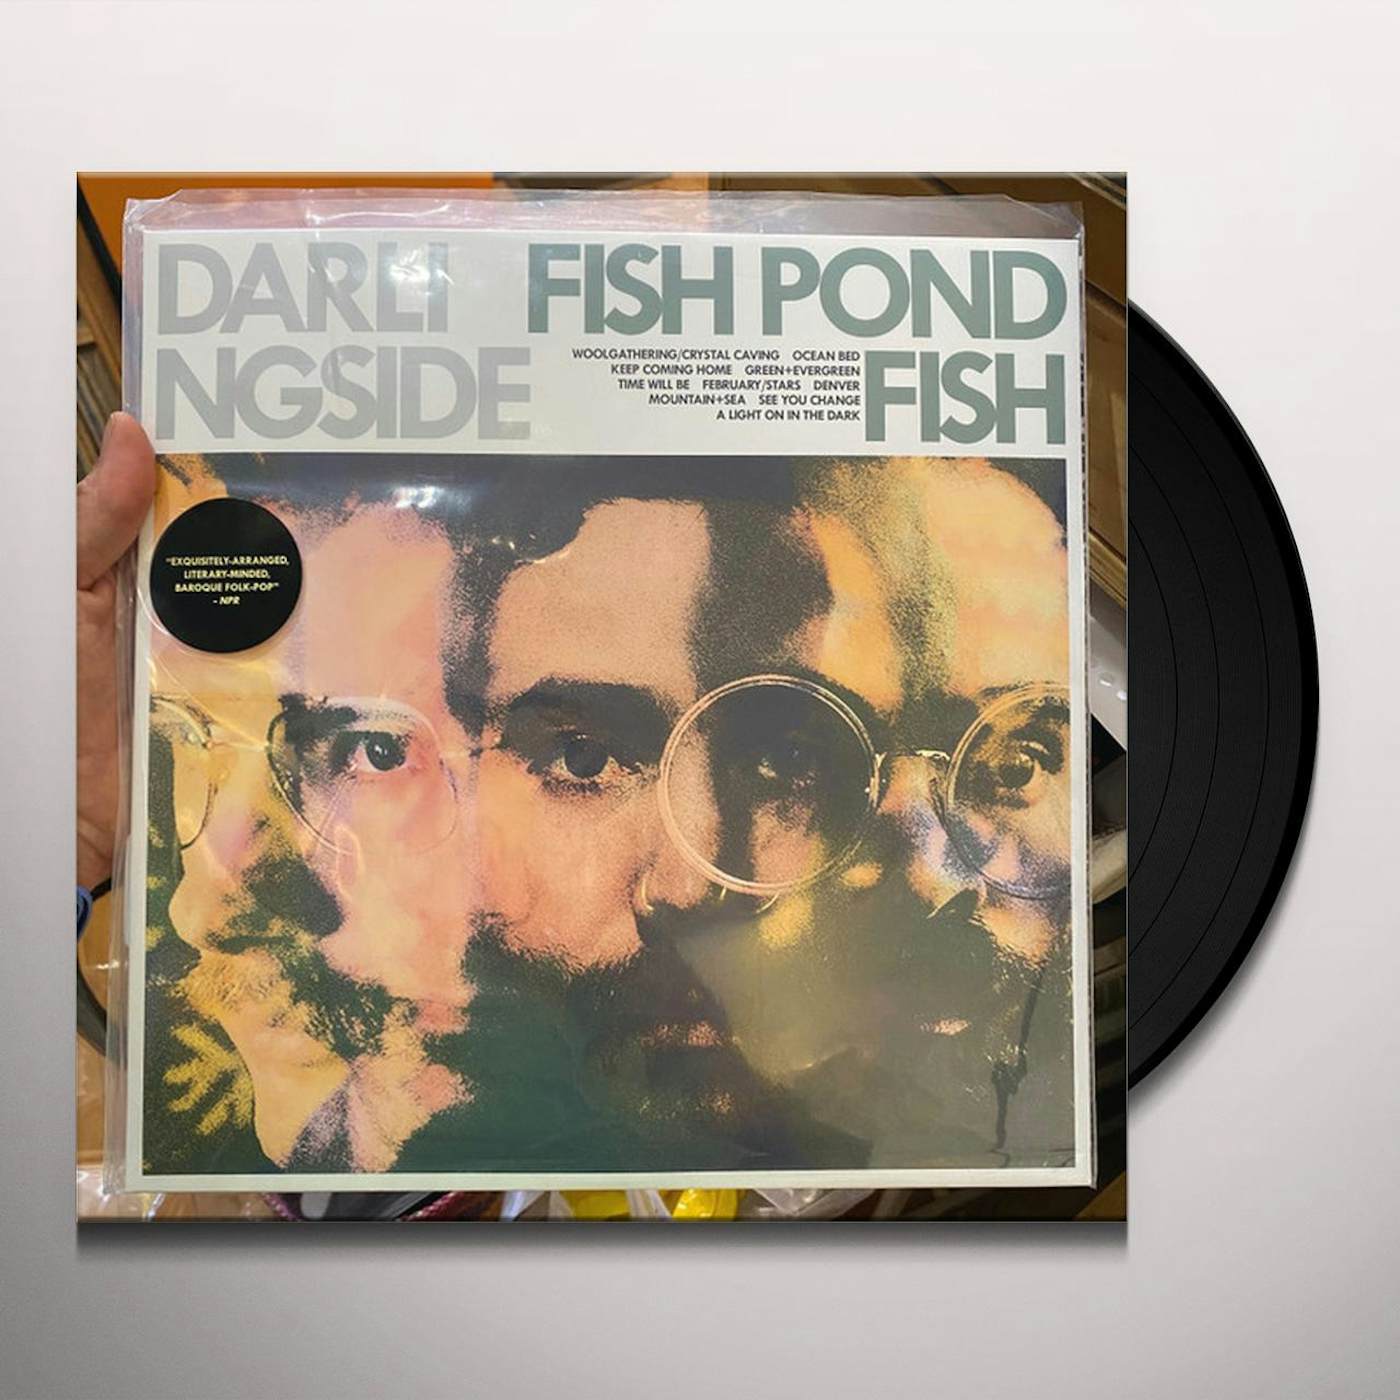 Darlingside FISH POND FISH Vinyl Record - Limited Edition